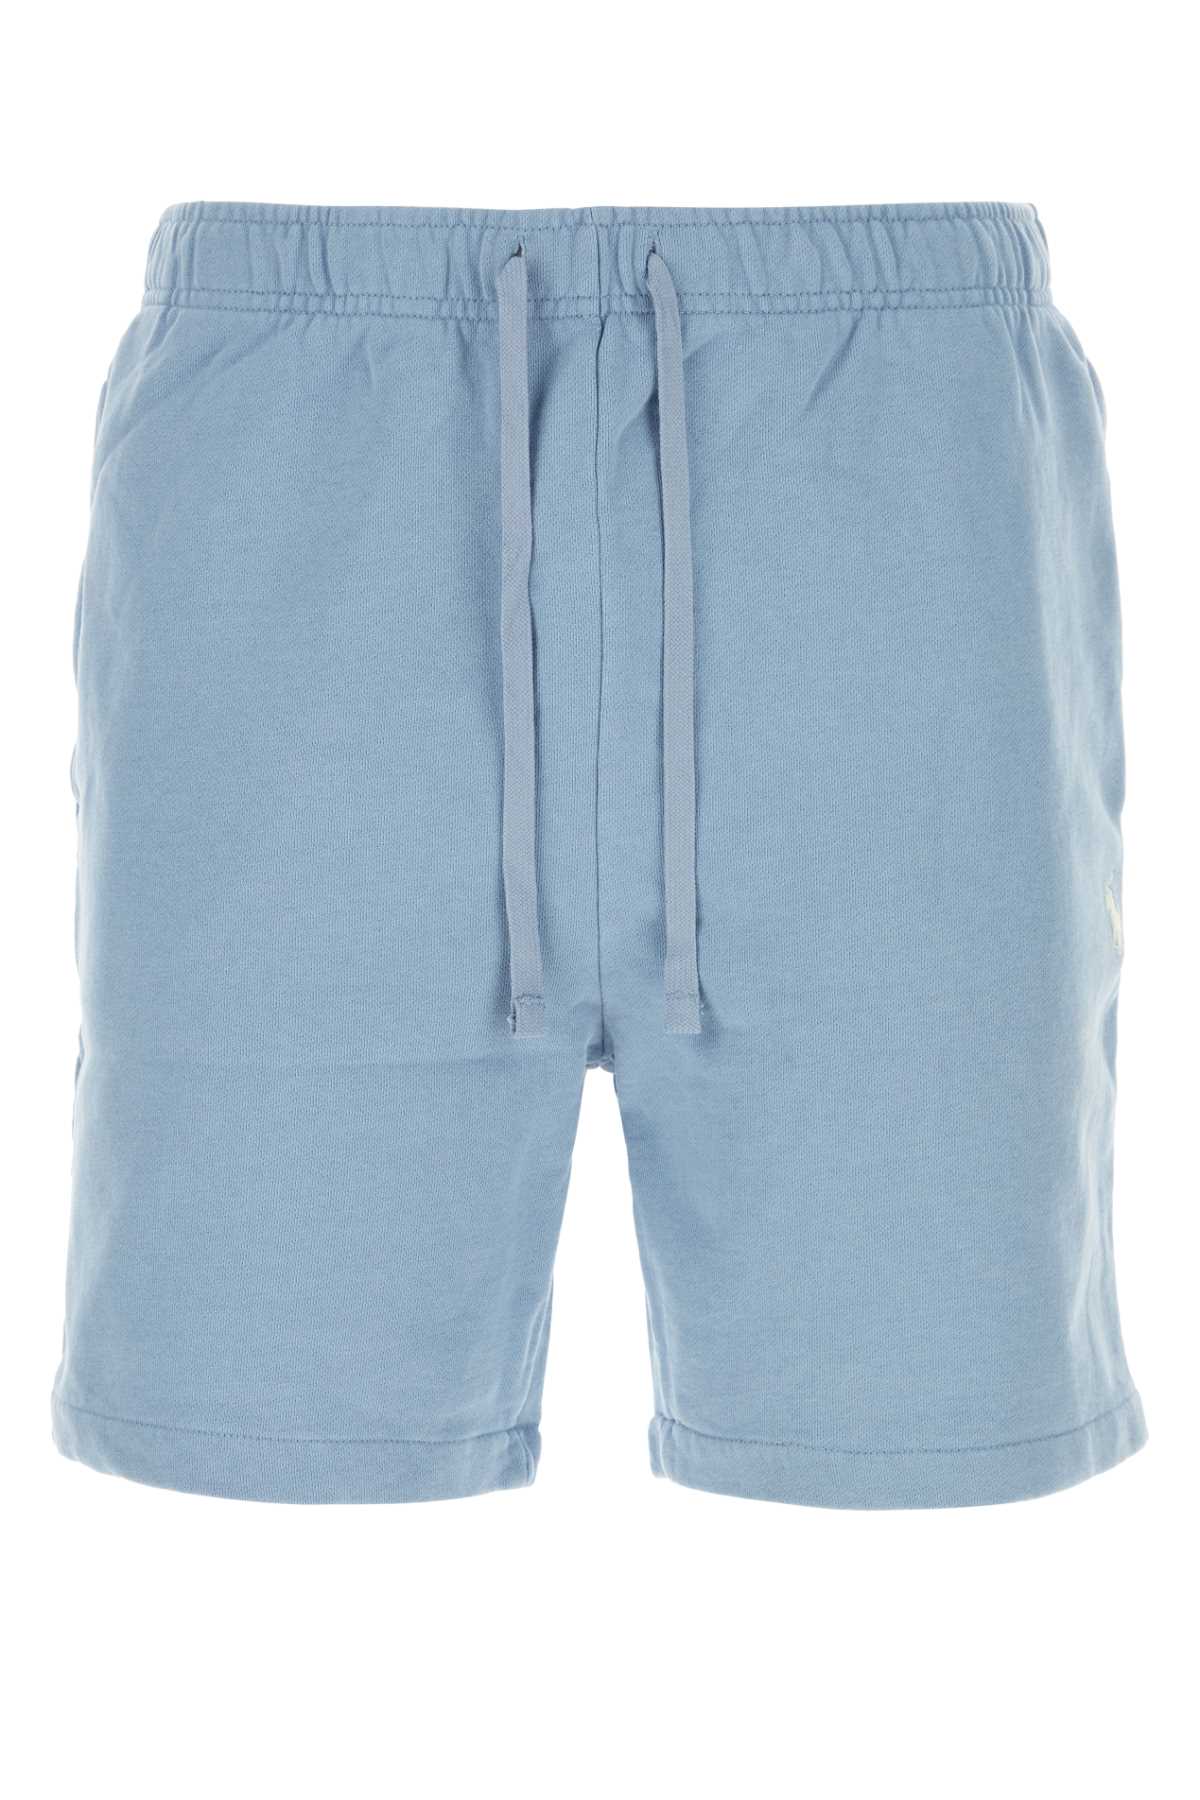 Shop Polo Ralph Lauren Light Blue Cotton Bermuda Shorts